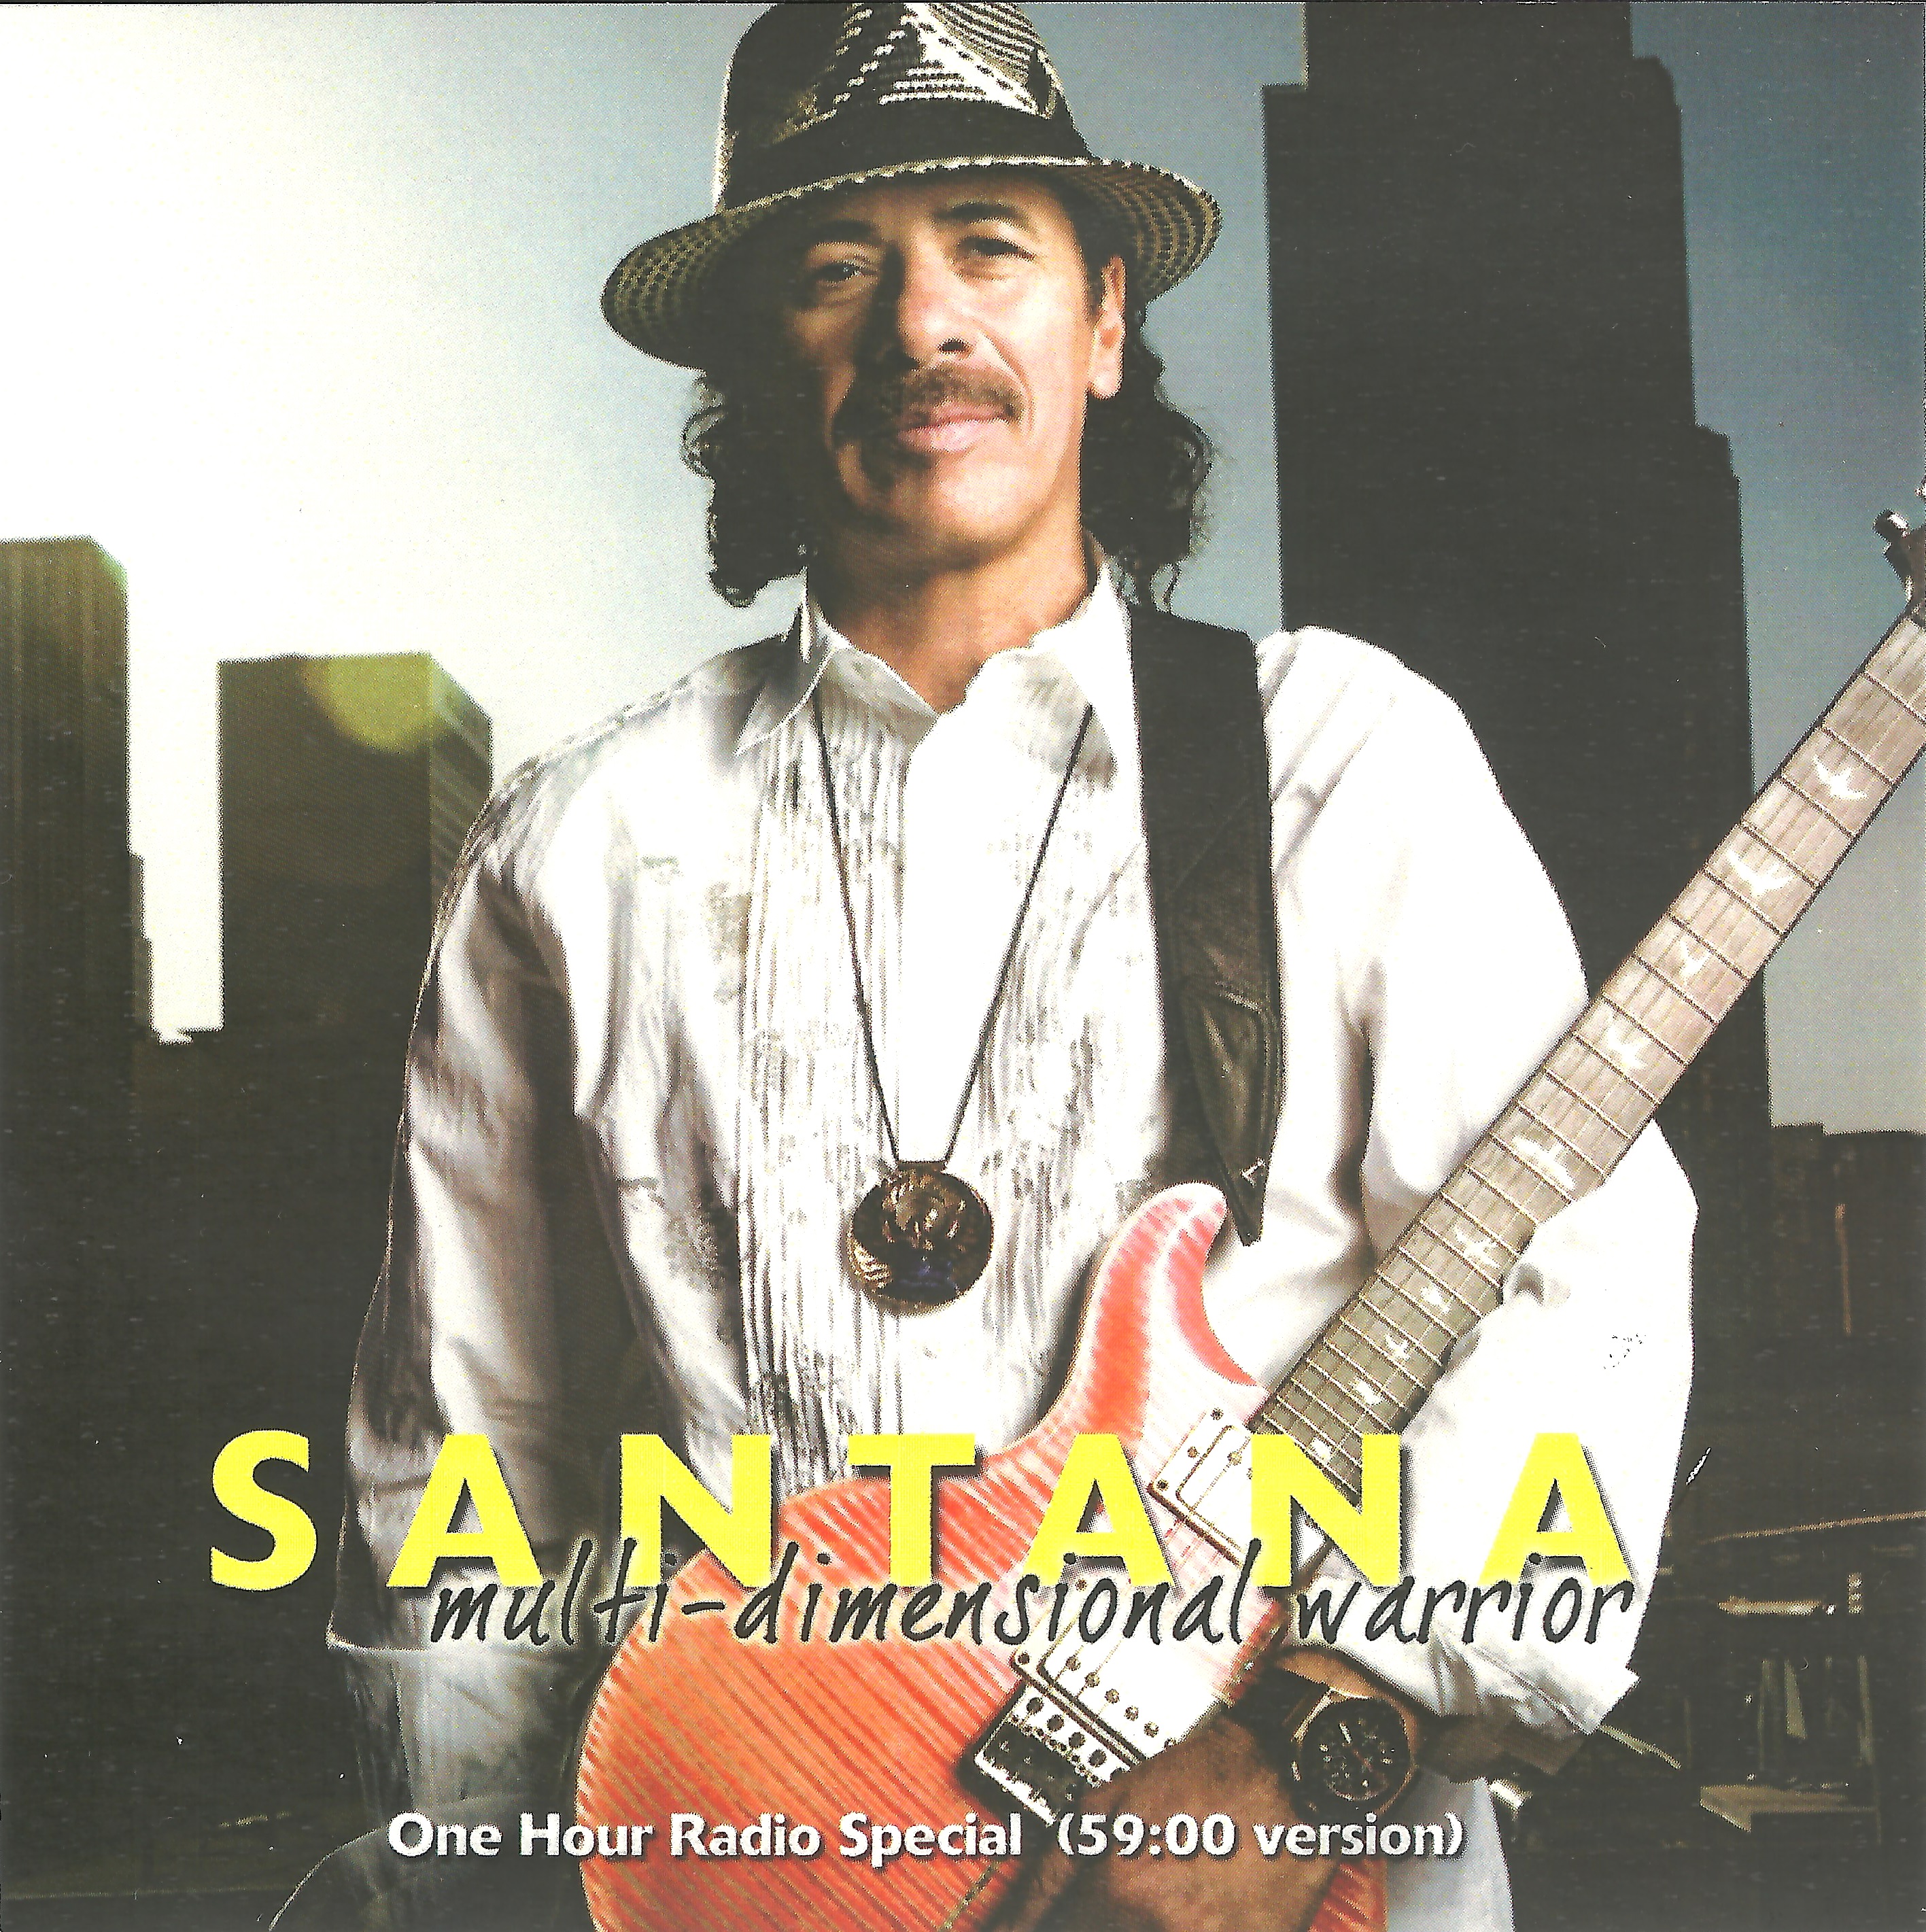 Santana2008-10Multi-DimensionalWarriorOneHourRadioSpecial (2).jpg